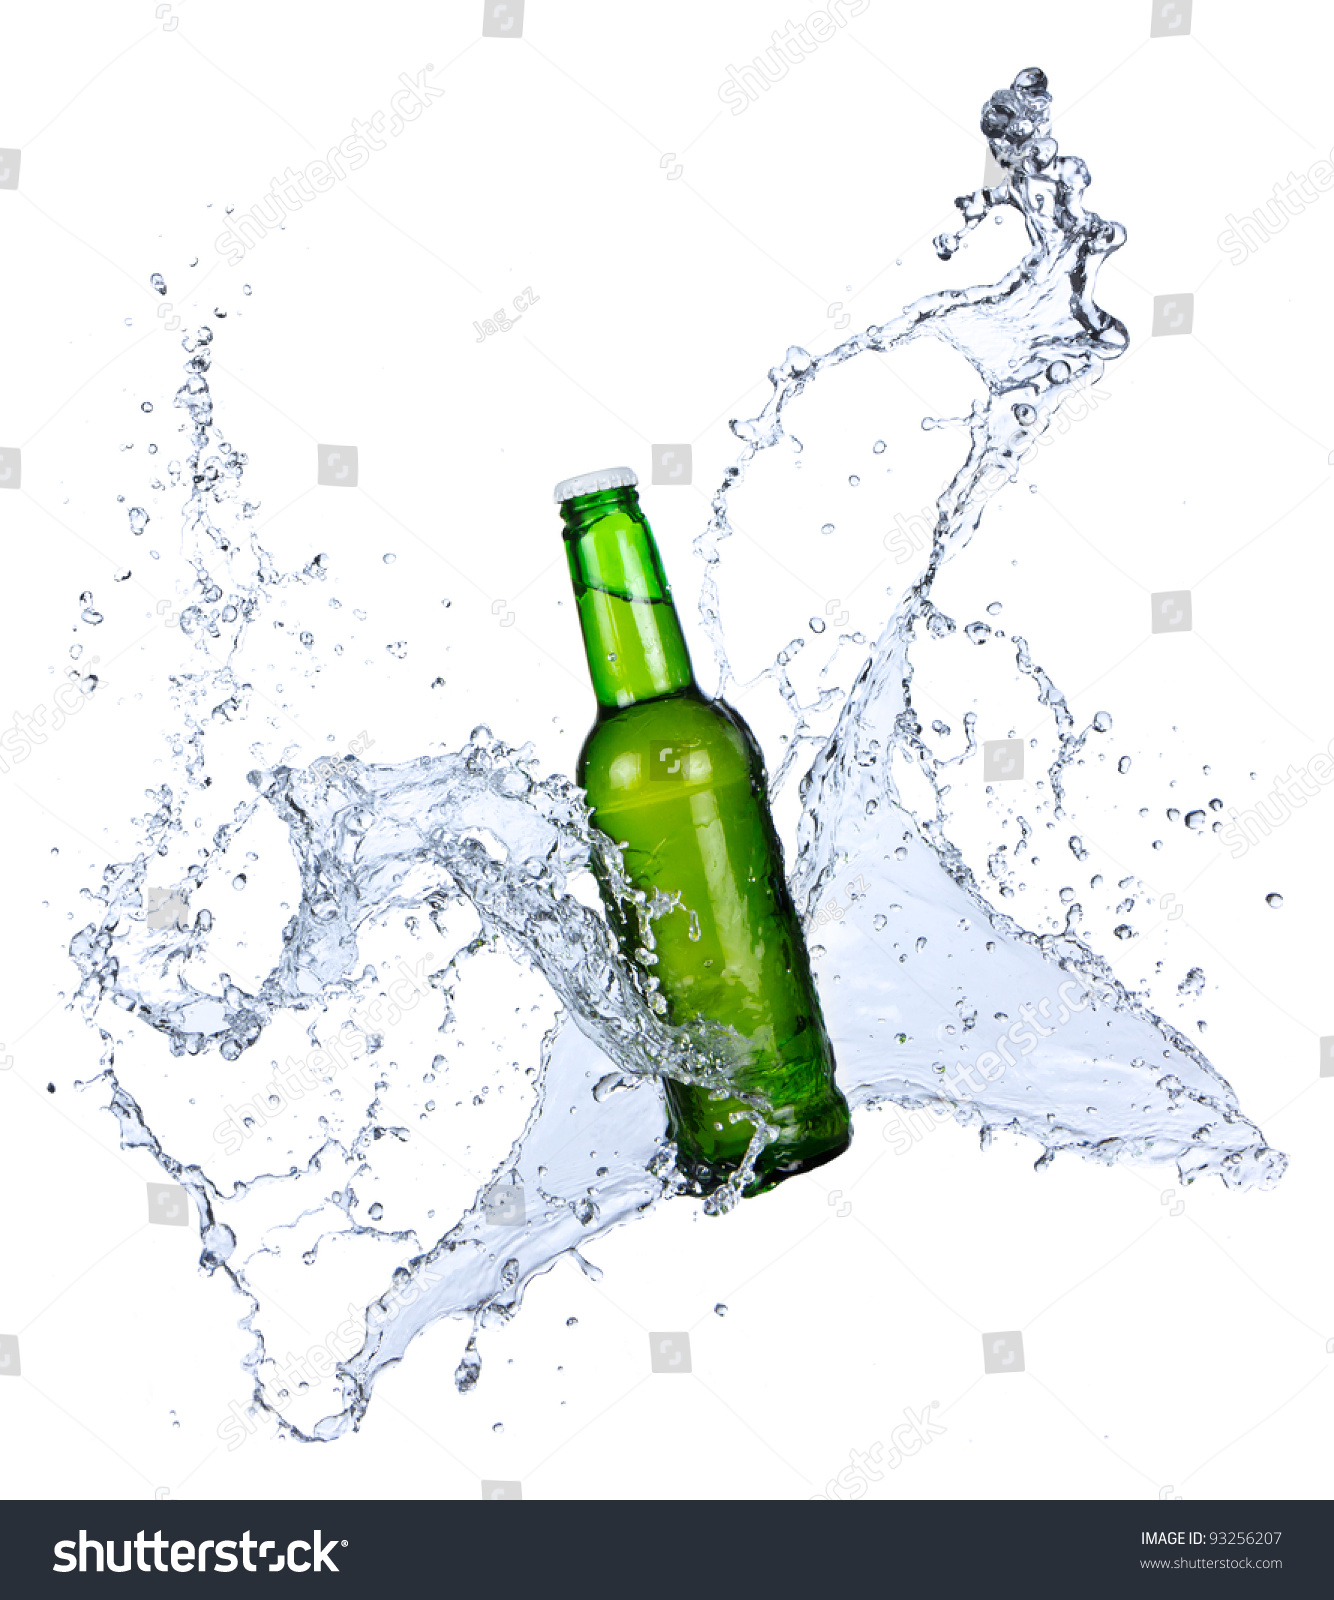 Bottle Beer Water Splash Isolated On Stock Photo 93256207 - Shutterstock